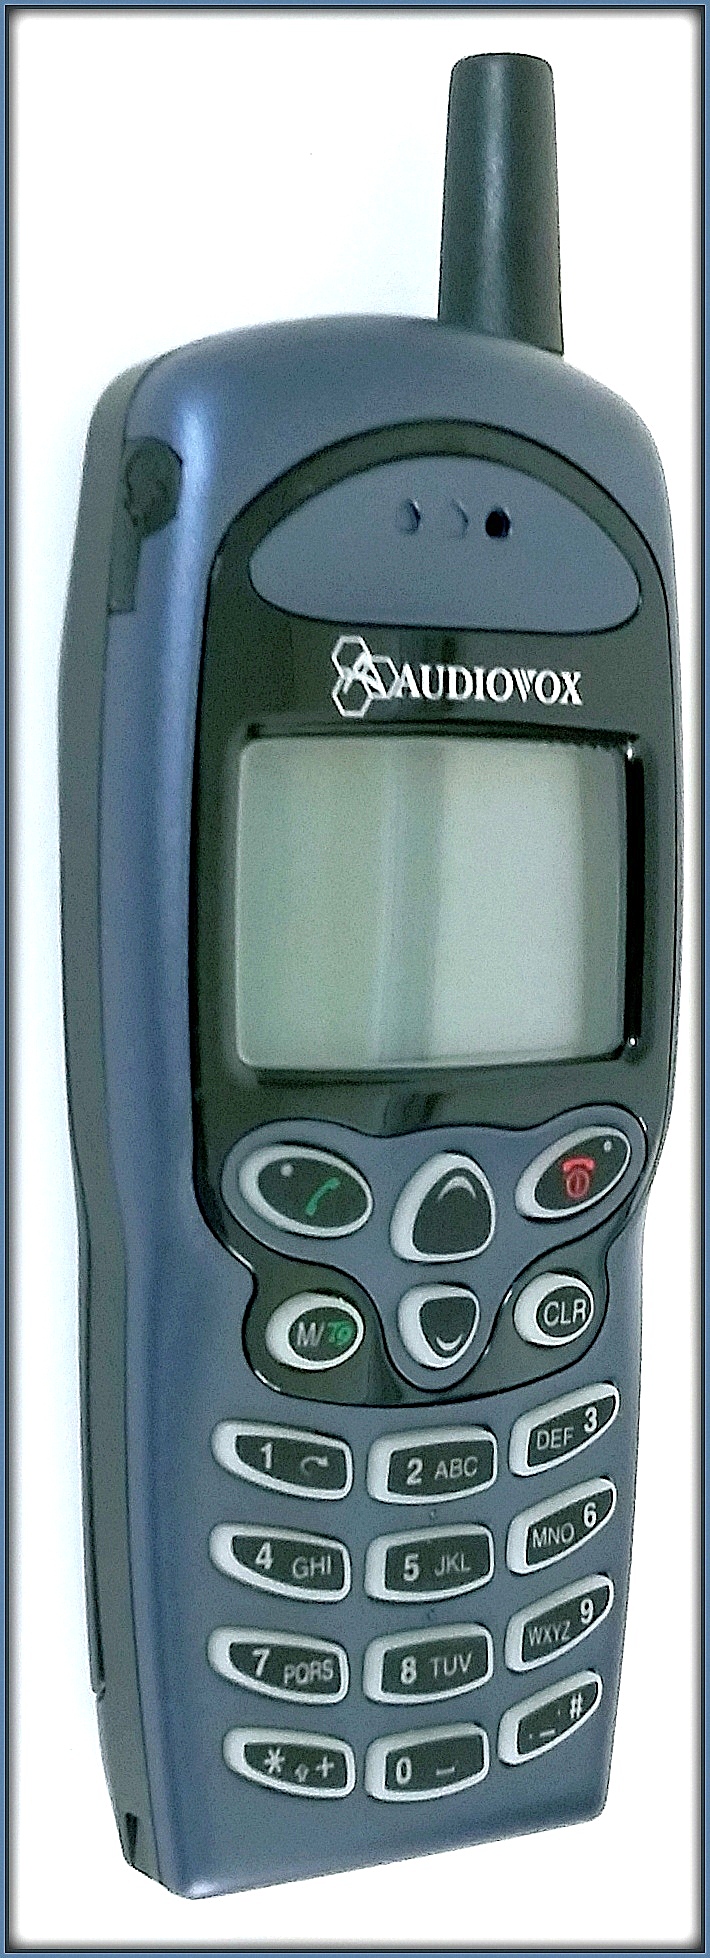 udiovox cell phone,audiovox new york,audiovox mobile phone,audiovox cell phone models